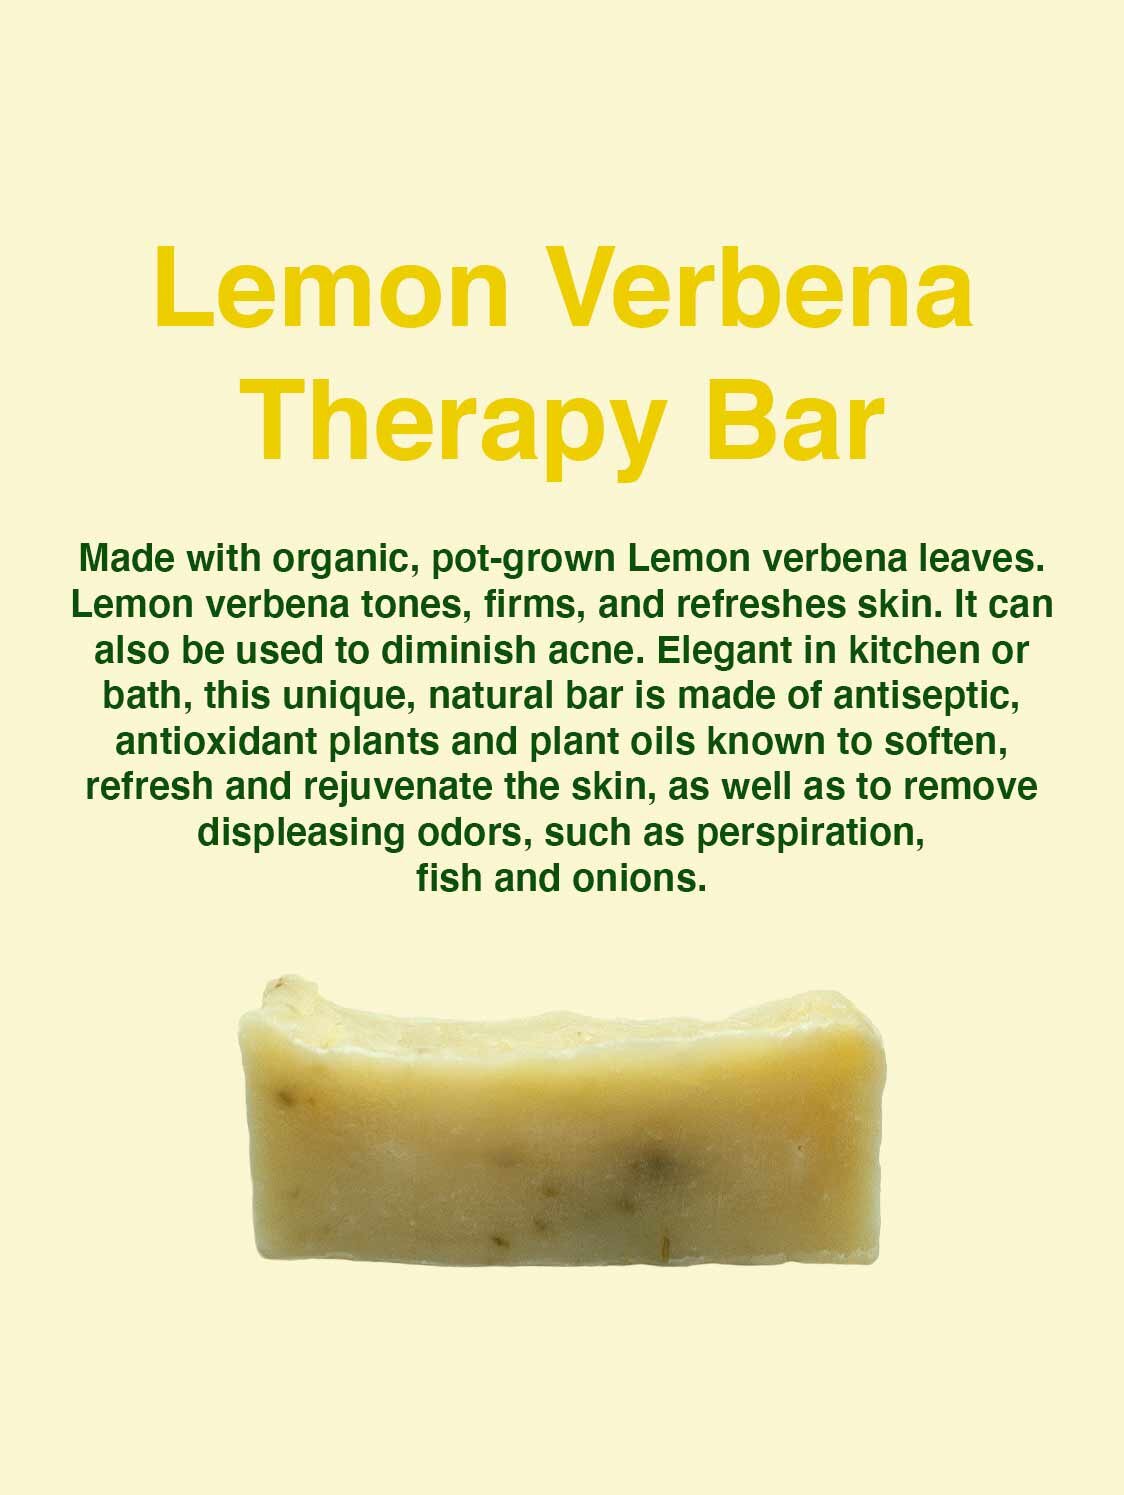 Lemon Verbena Oil: Benefits & Uses